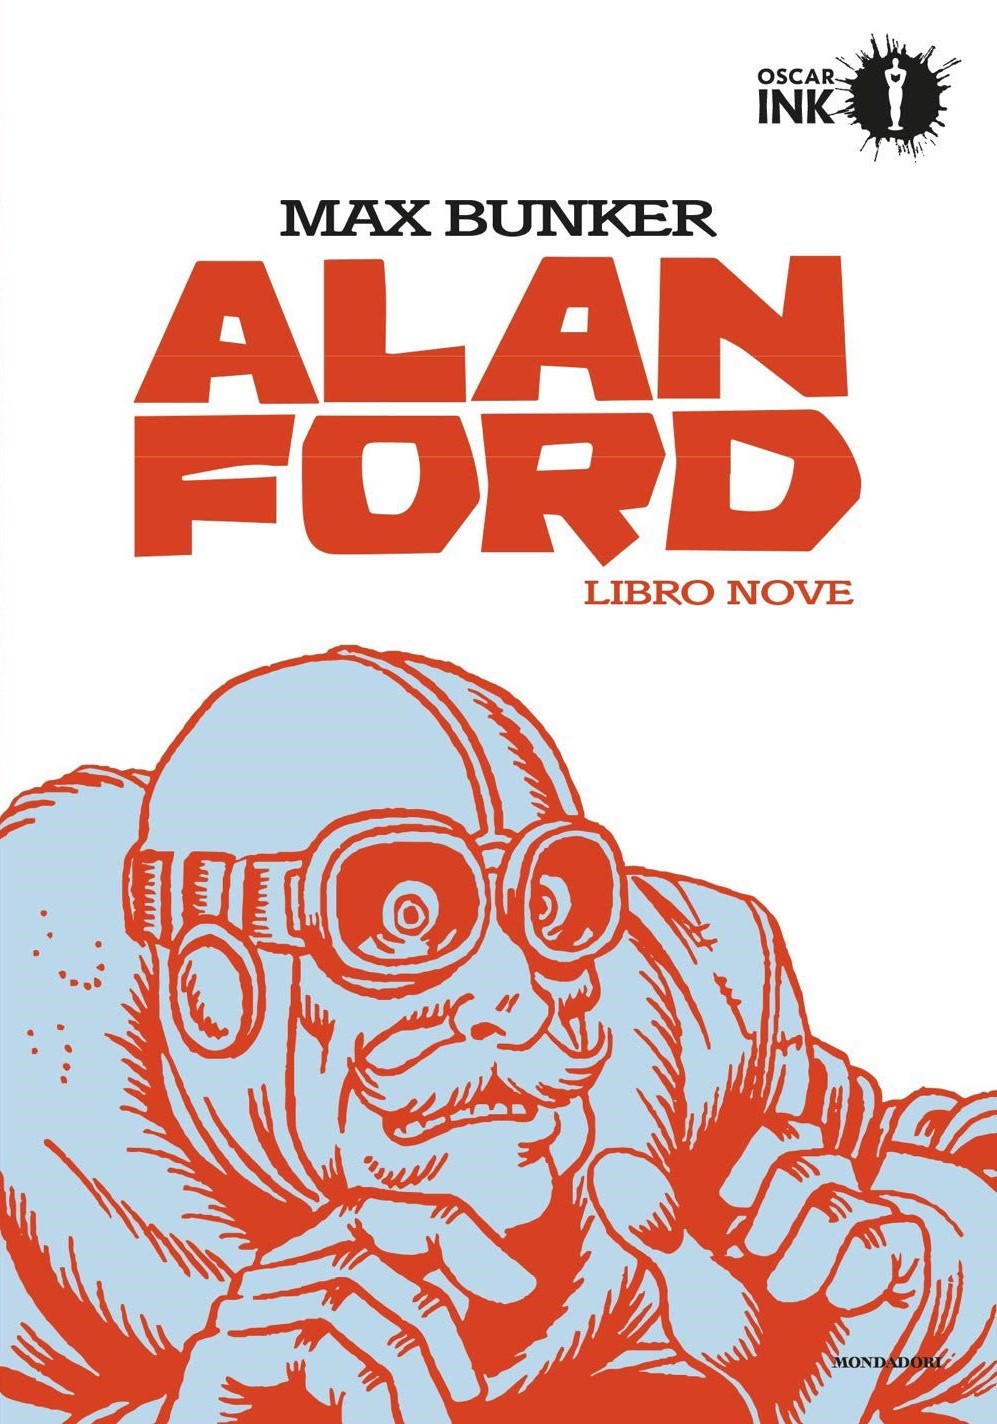 Alan Ford 9